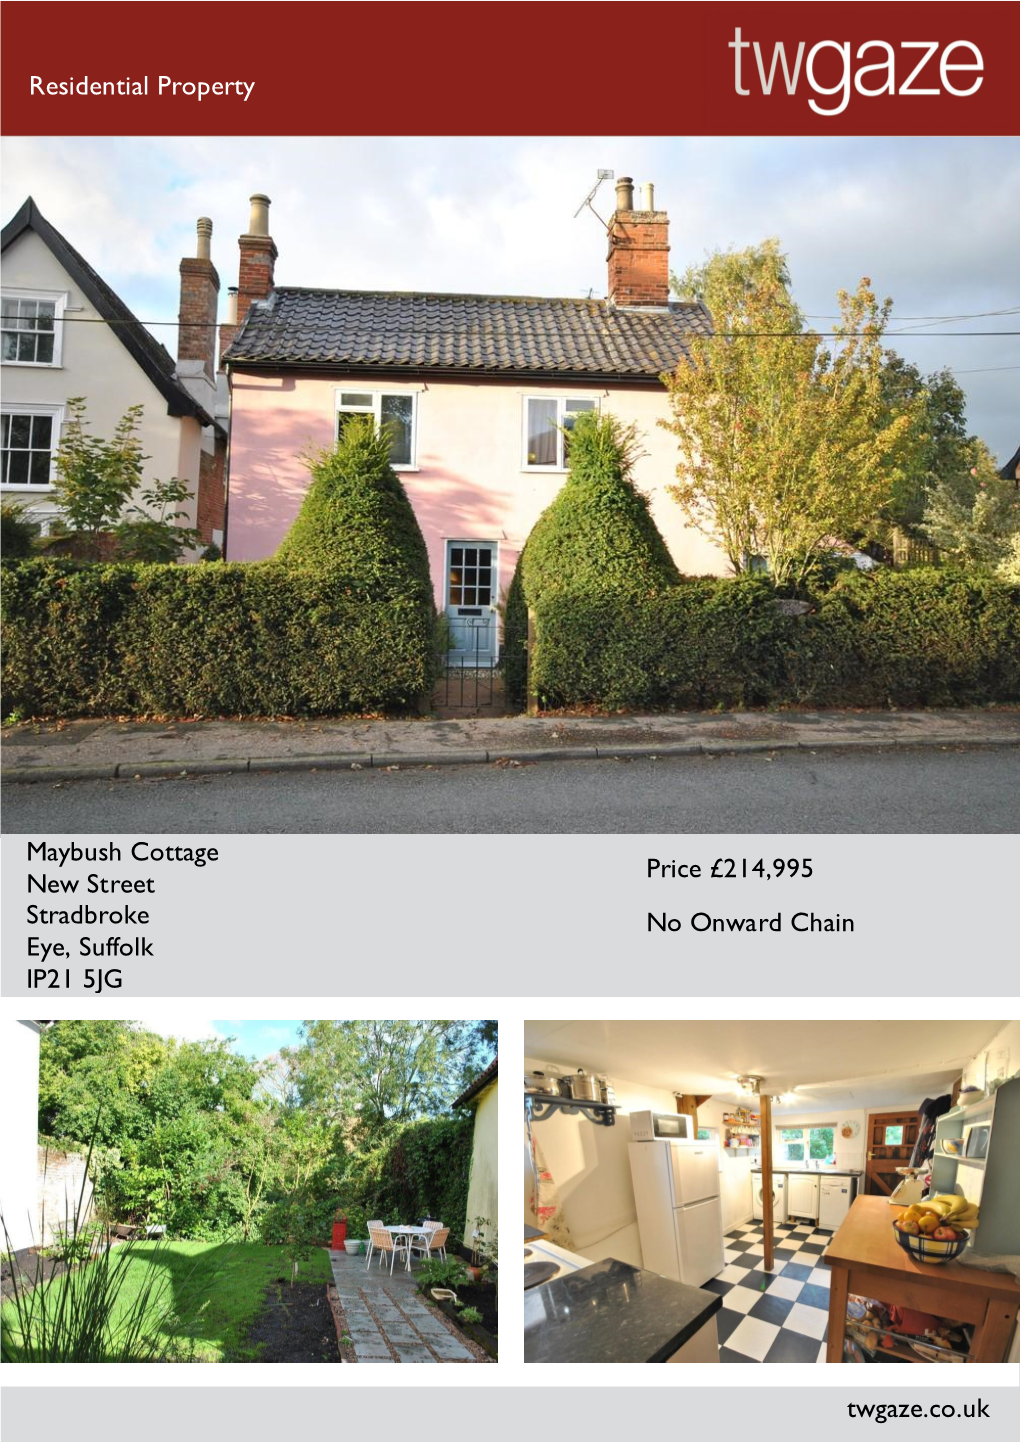 Maybush Cottage New Street Stradbroke Eye, Suffolk IP21 5JG Price £214995 No Onward Chain Twgaze.Co.Uk